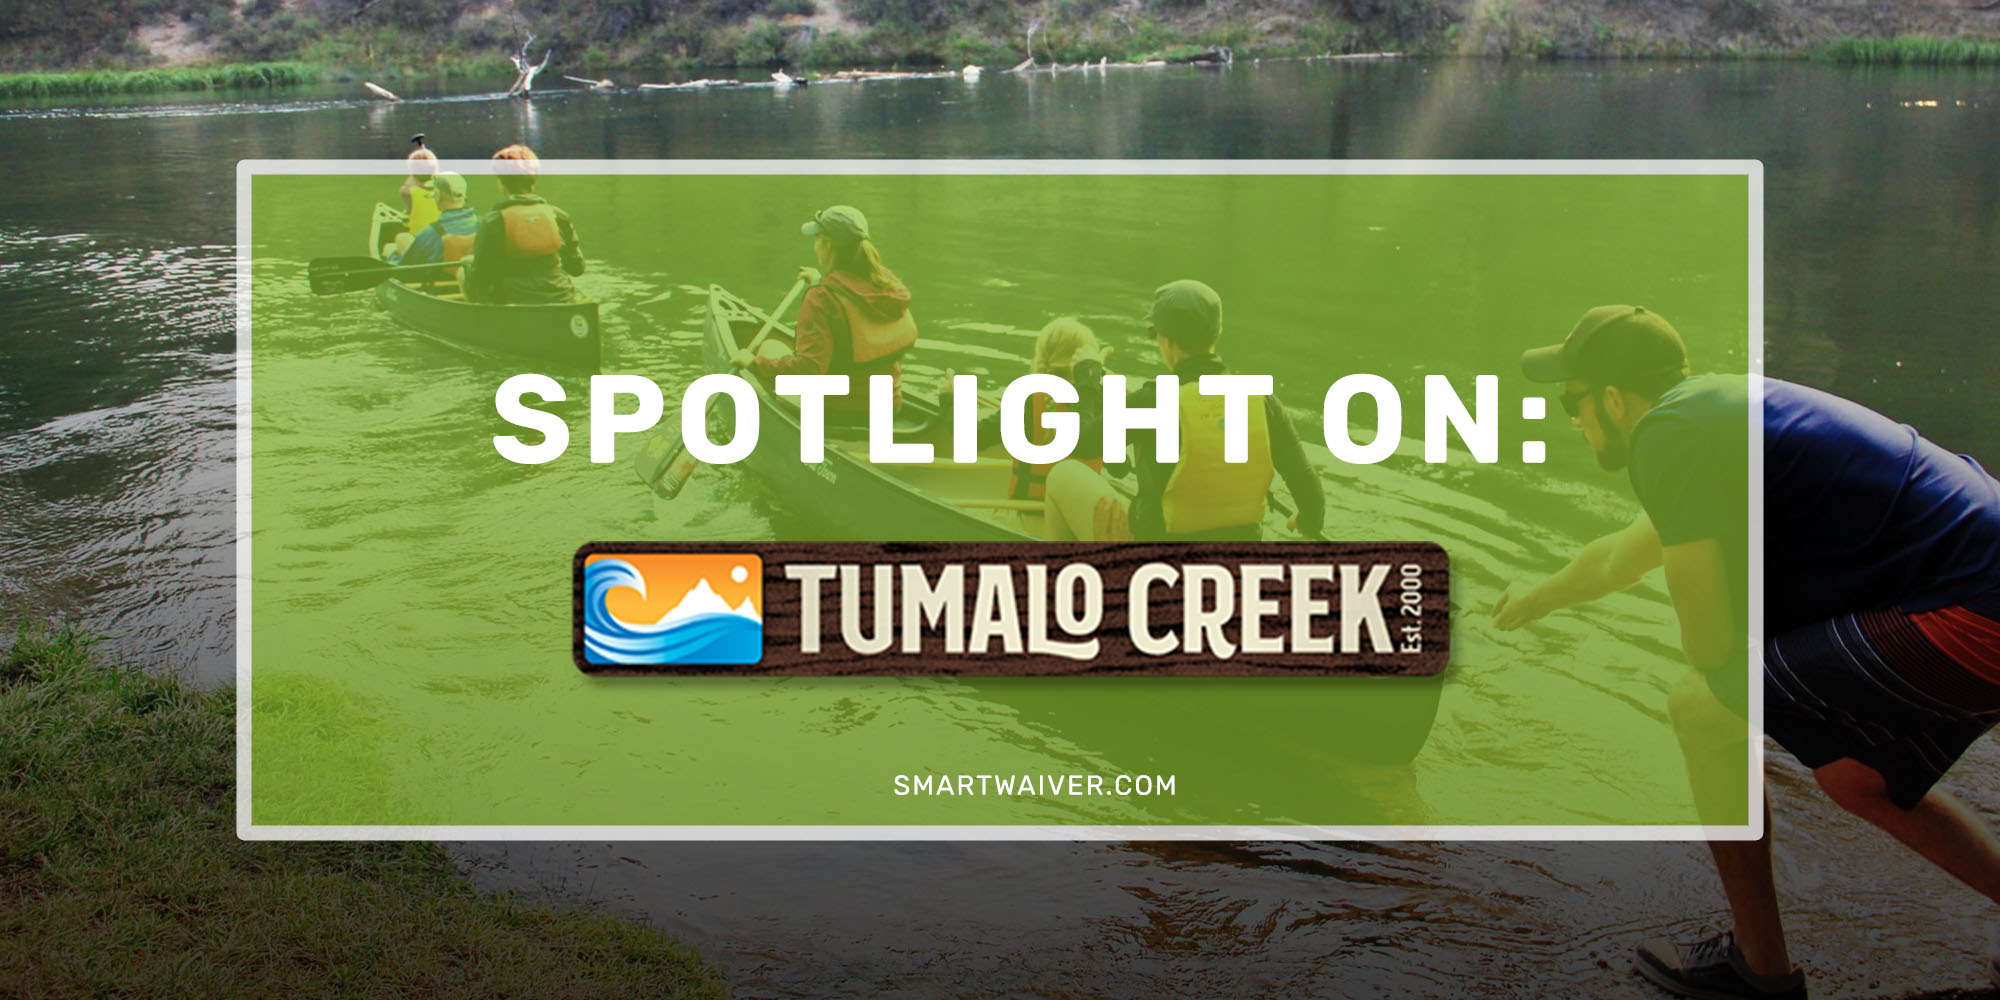 tumalo creek uses contactless digital waivers